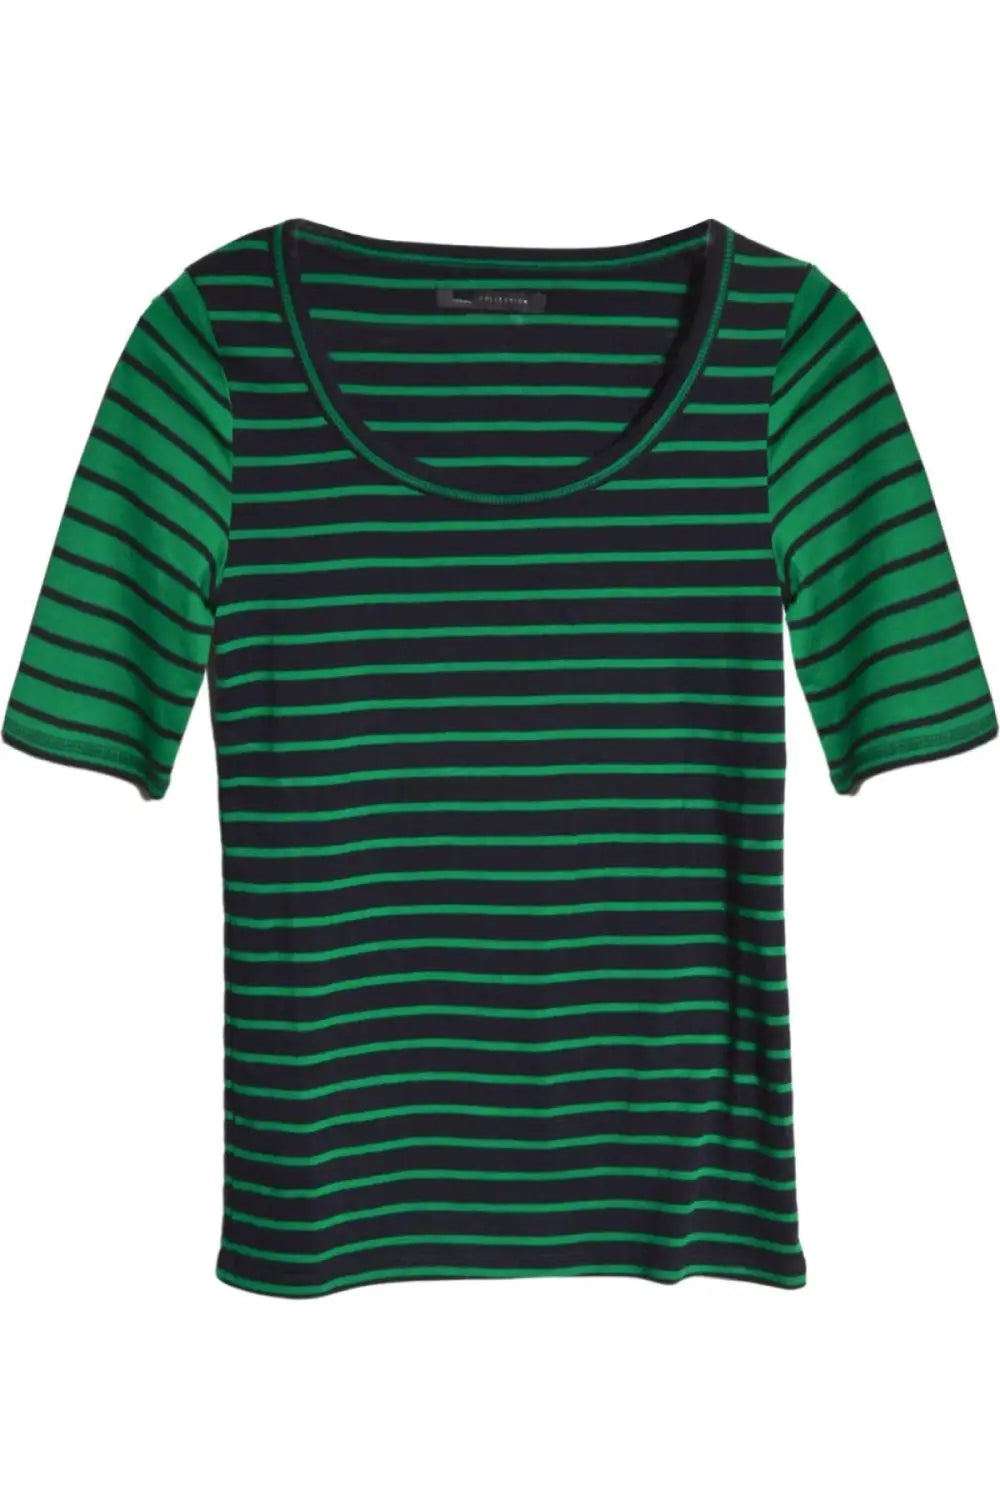 M&S Striped Scoop Neck T-Shirt